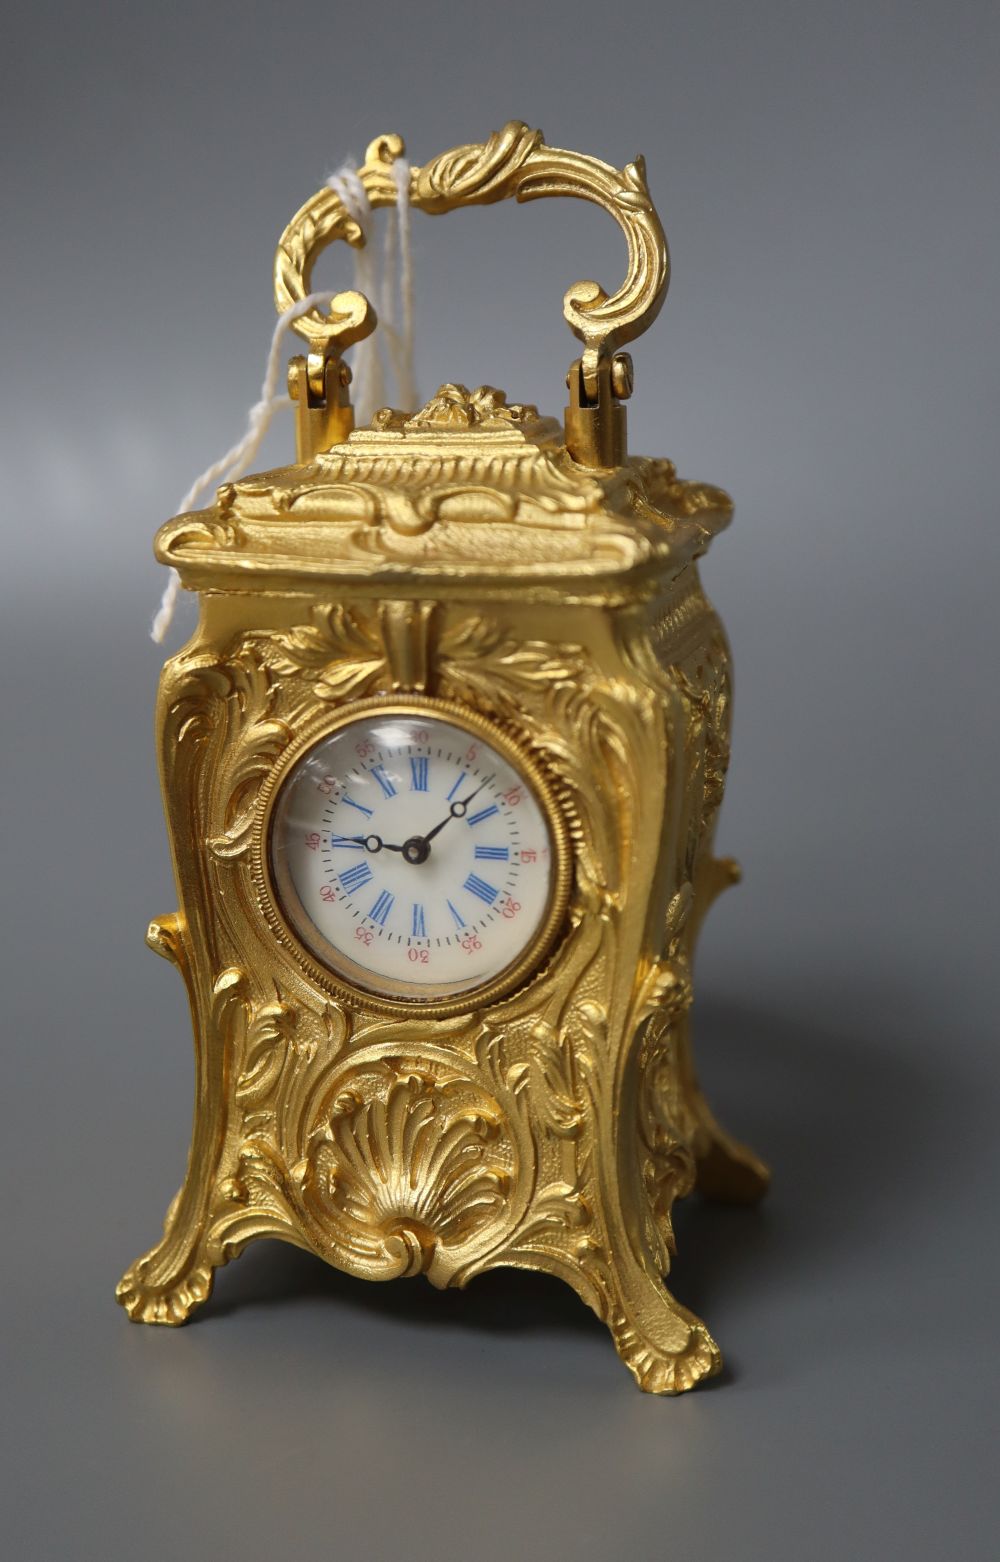 A miniature carriage timepiece